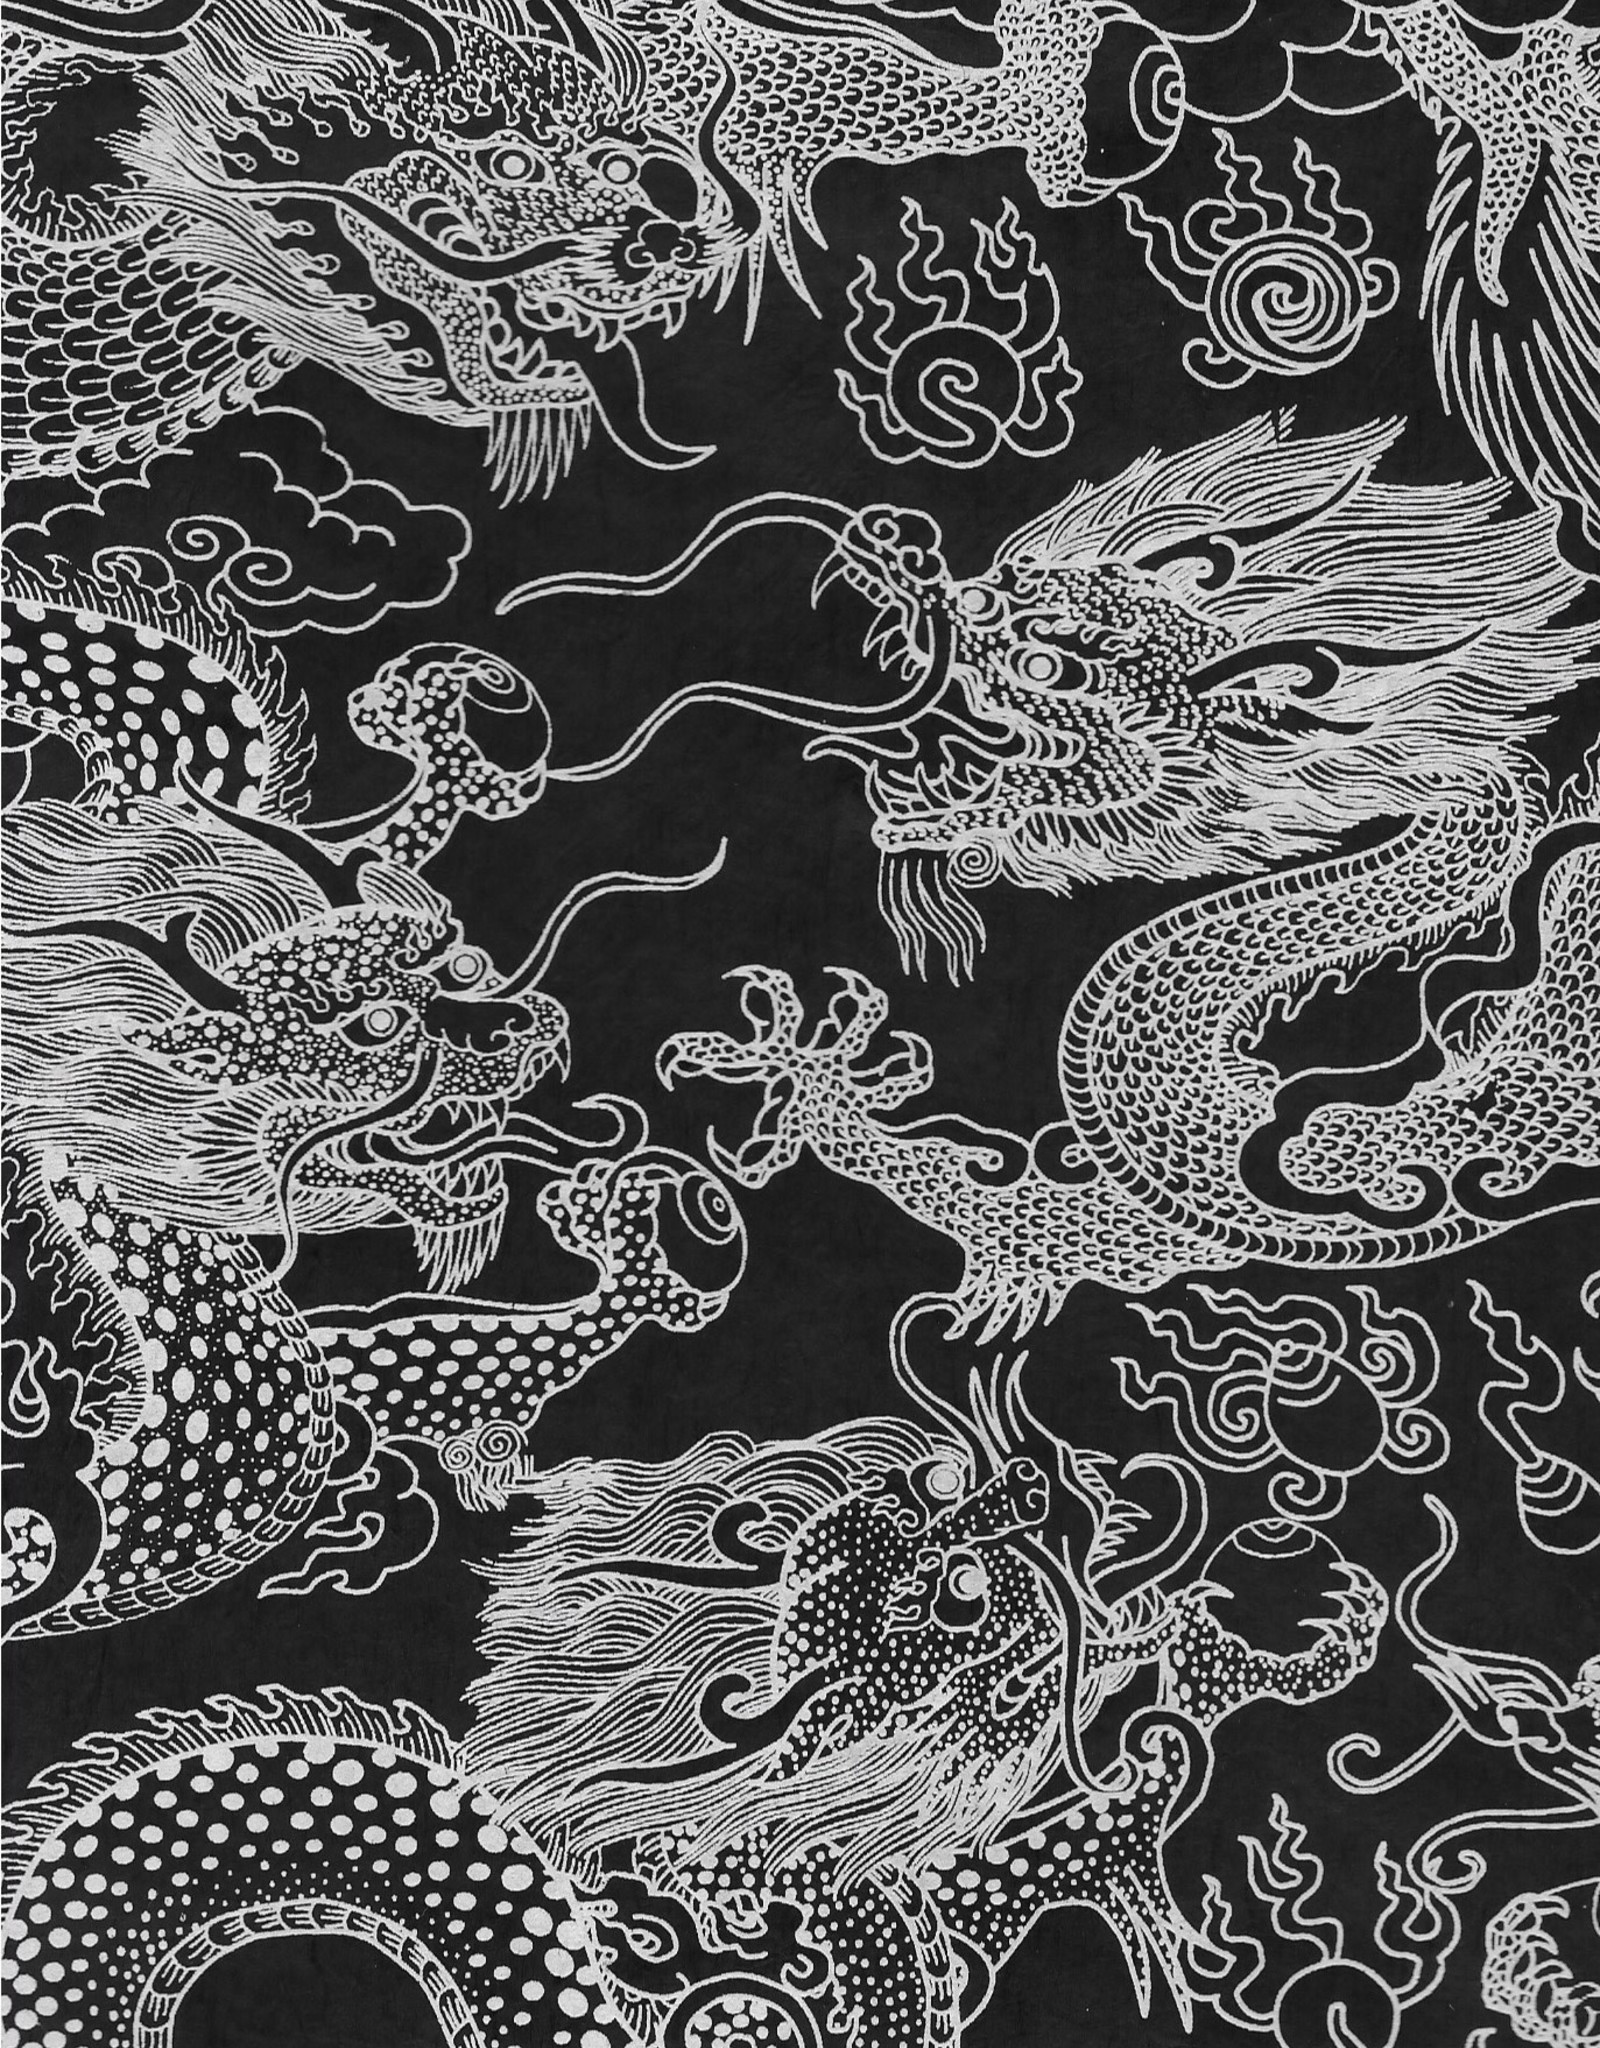 Dragon Beasts, White on Black, 20" x 30"